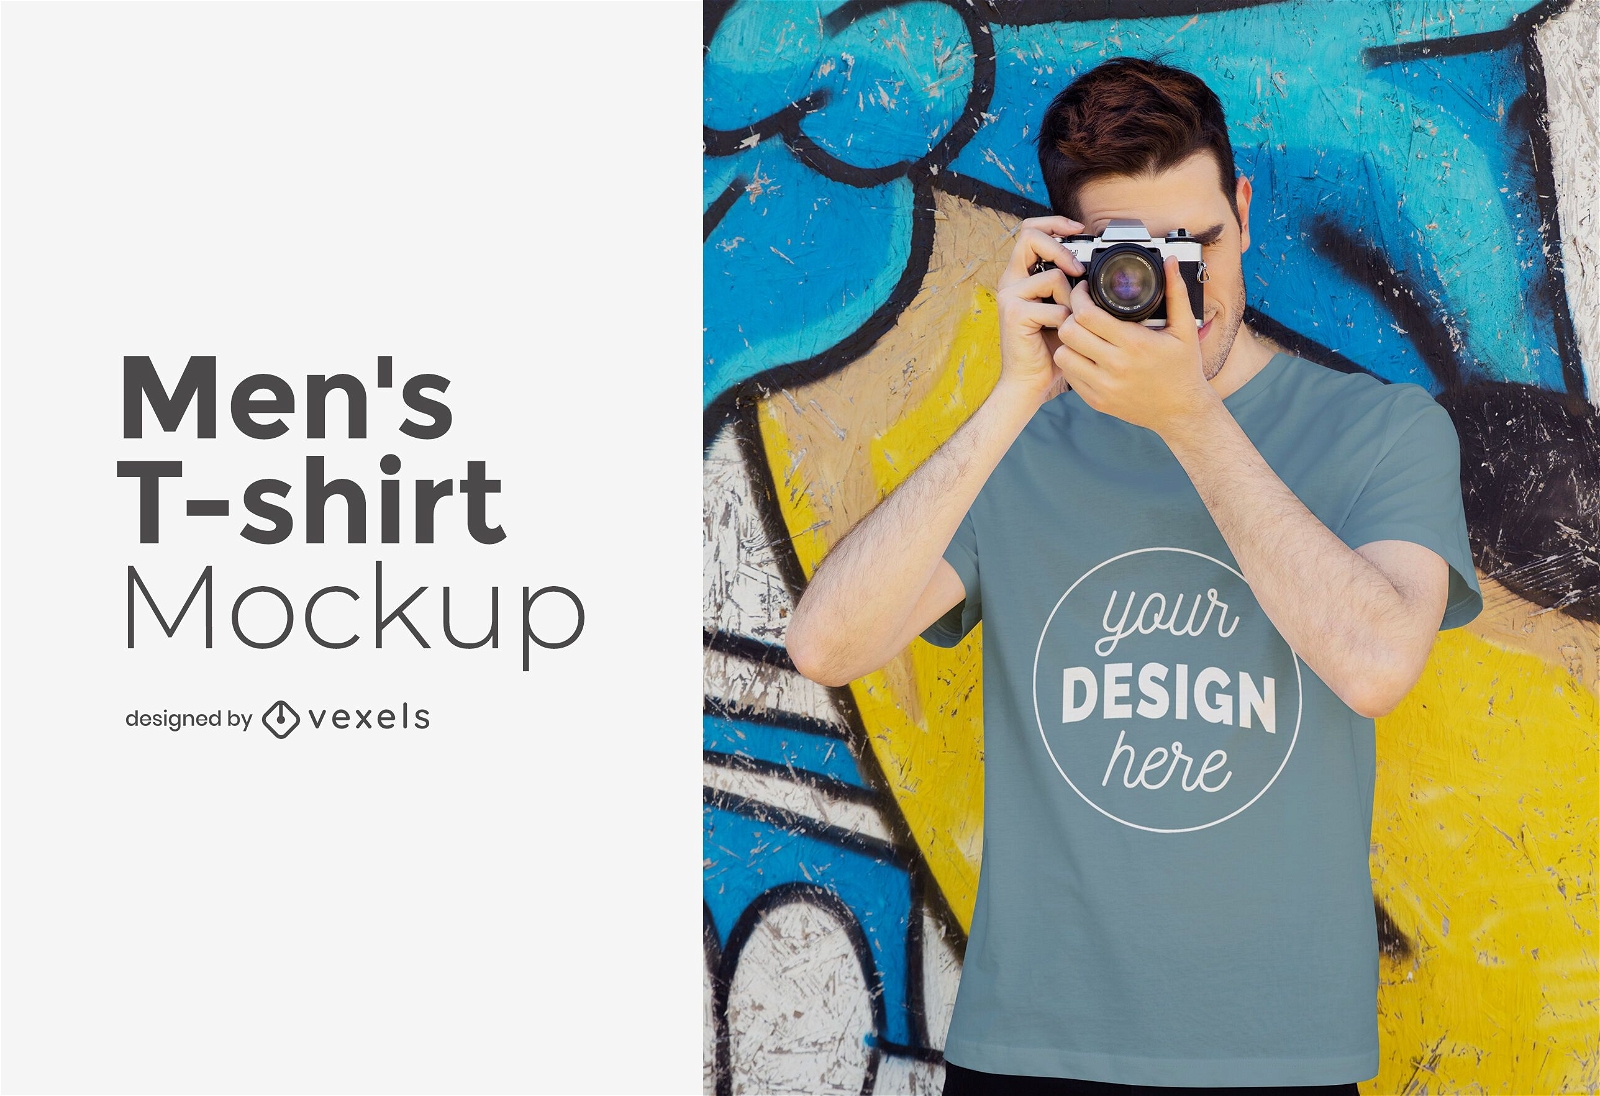 Men's t-shirt mockup design